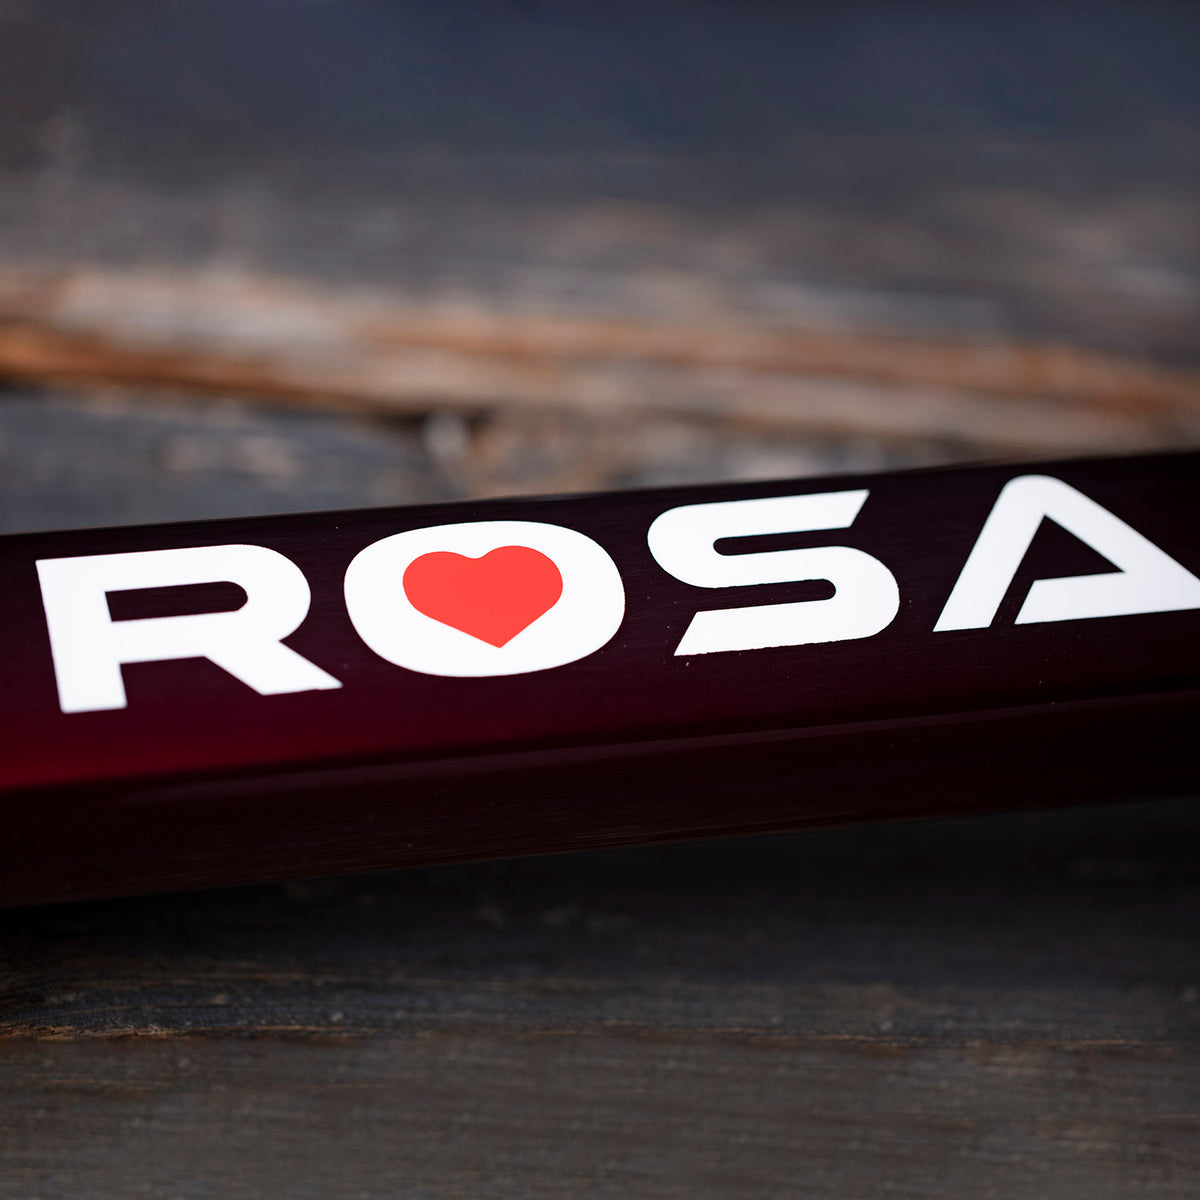 Close up image of the De Rossa logo on the Idol frameset